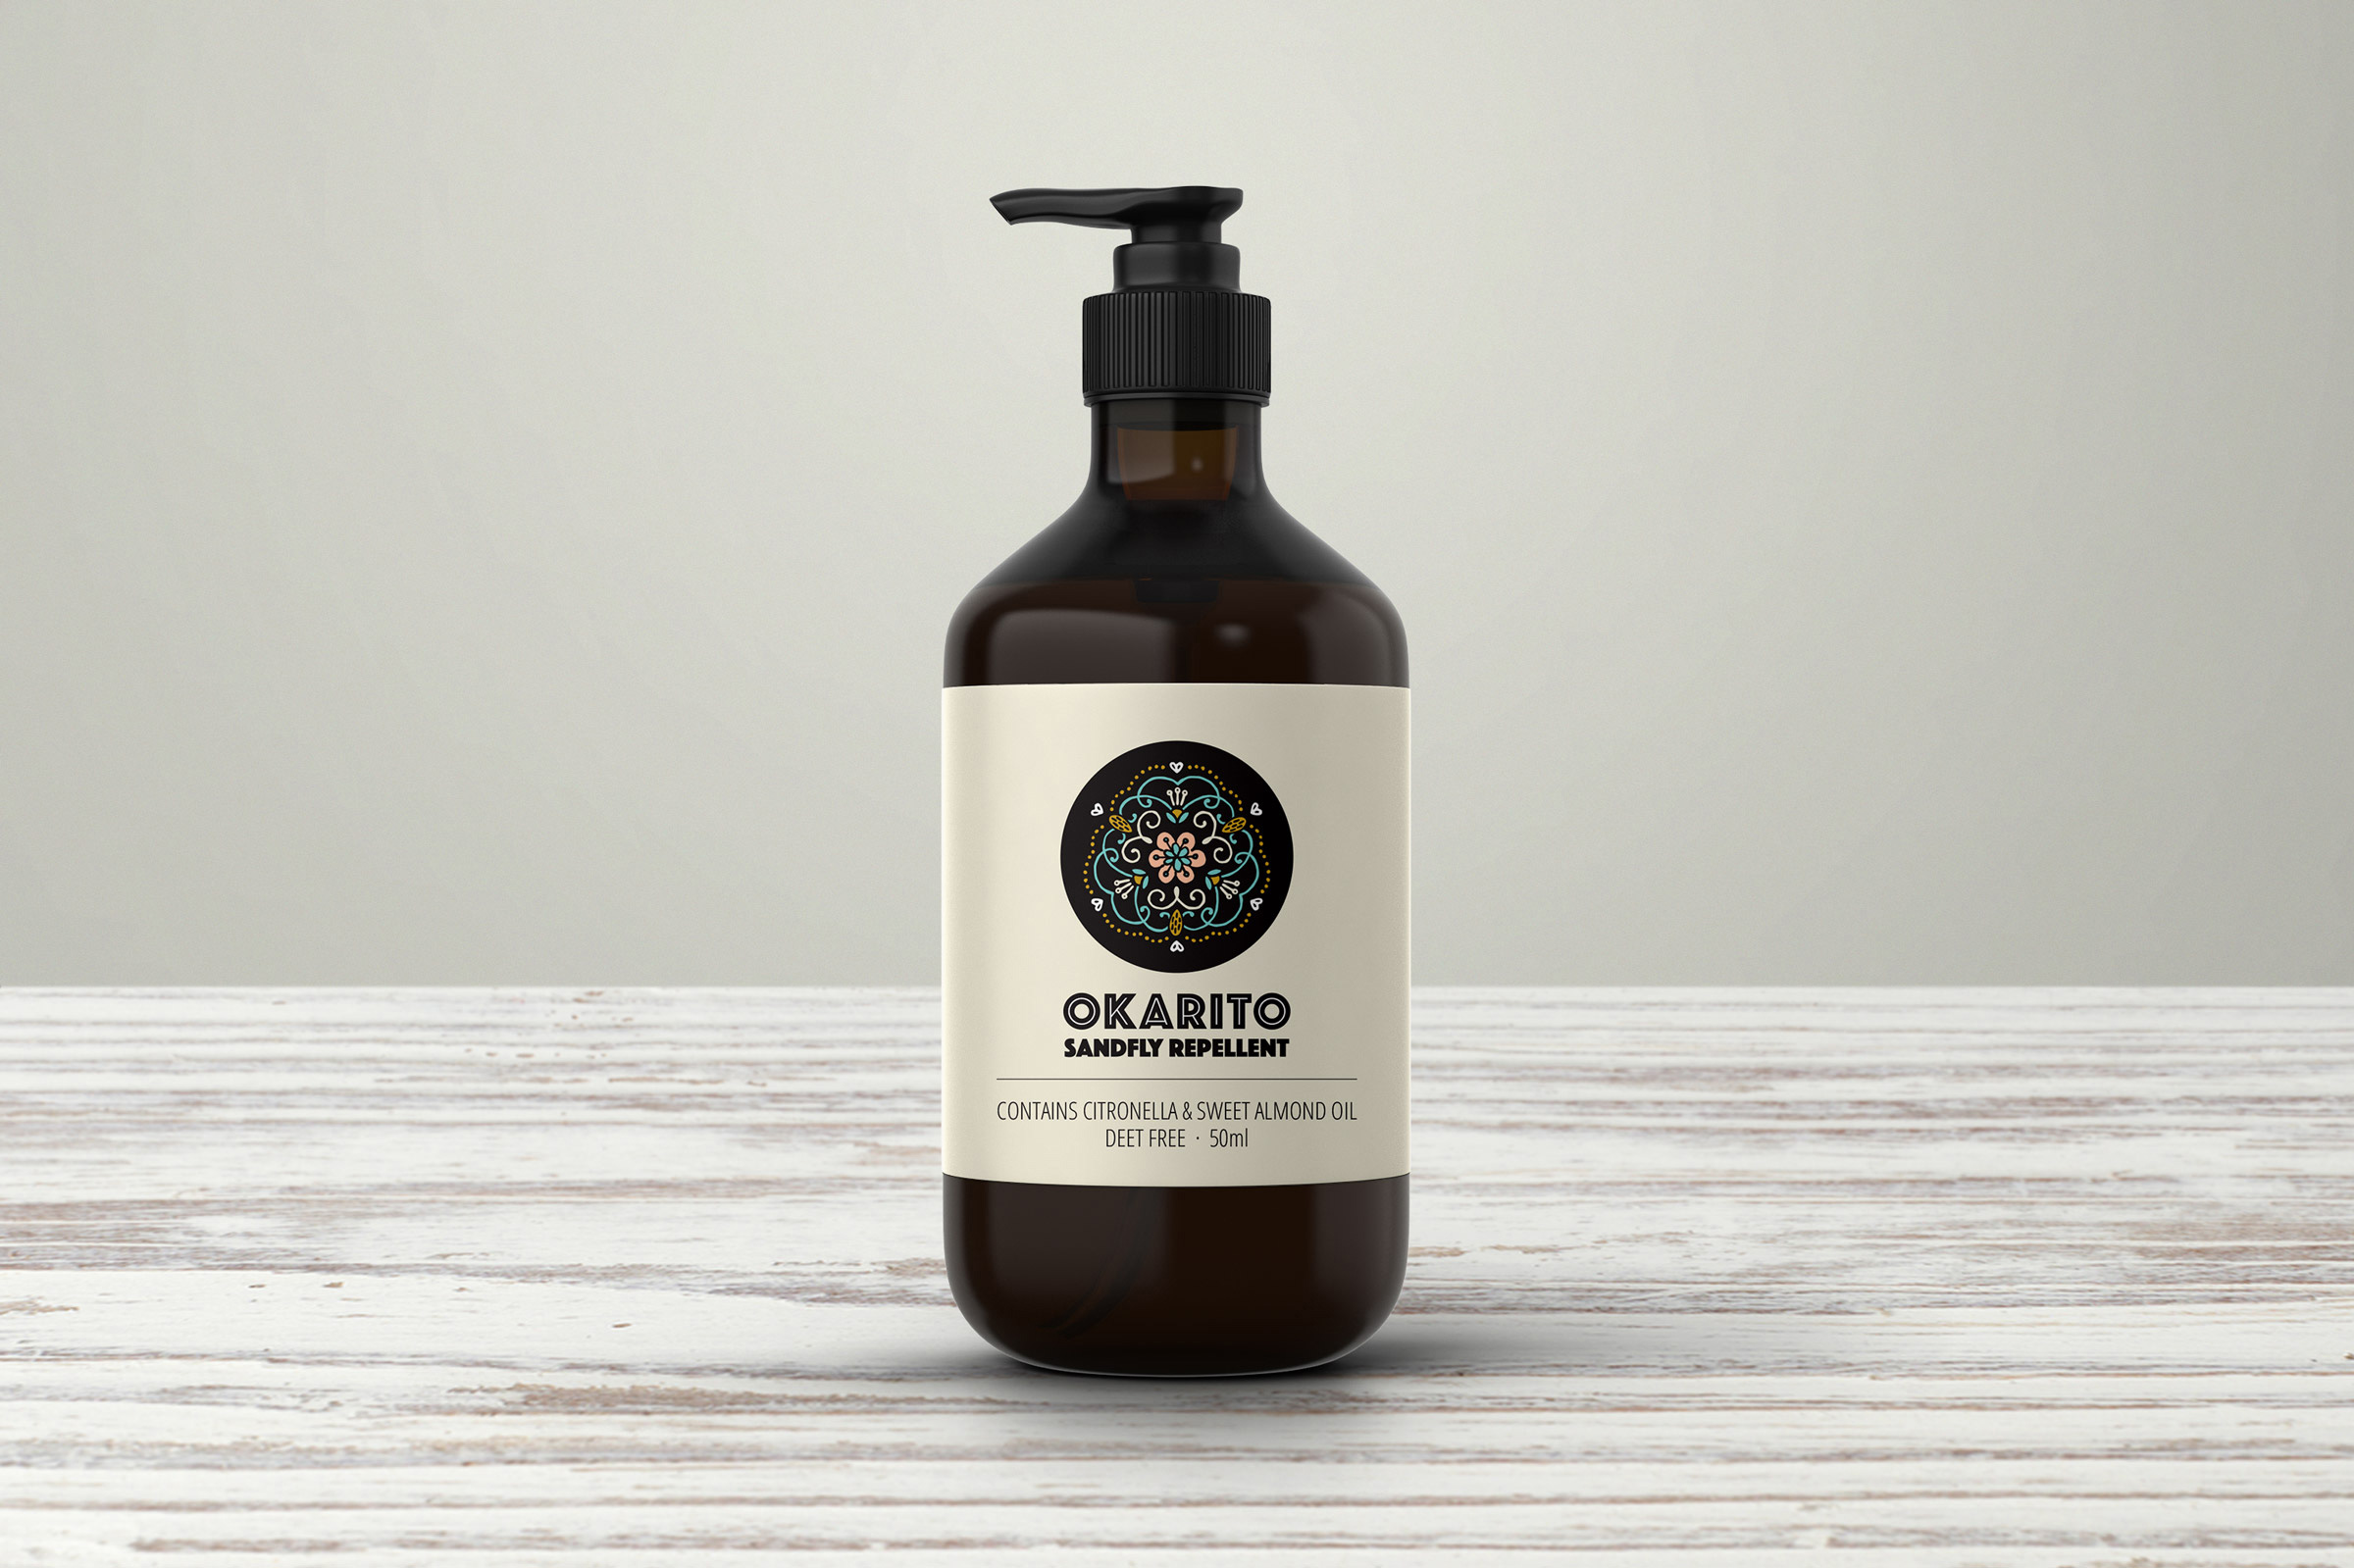 Okarito Sandfly Repellent | Packaging design